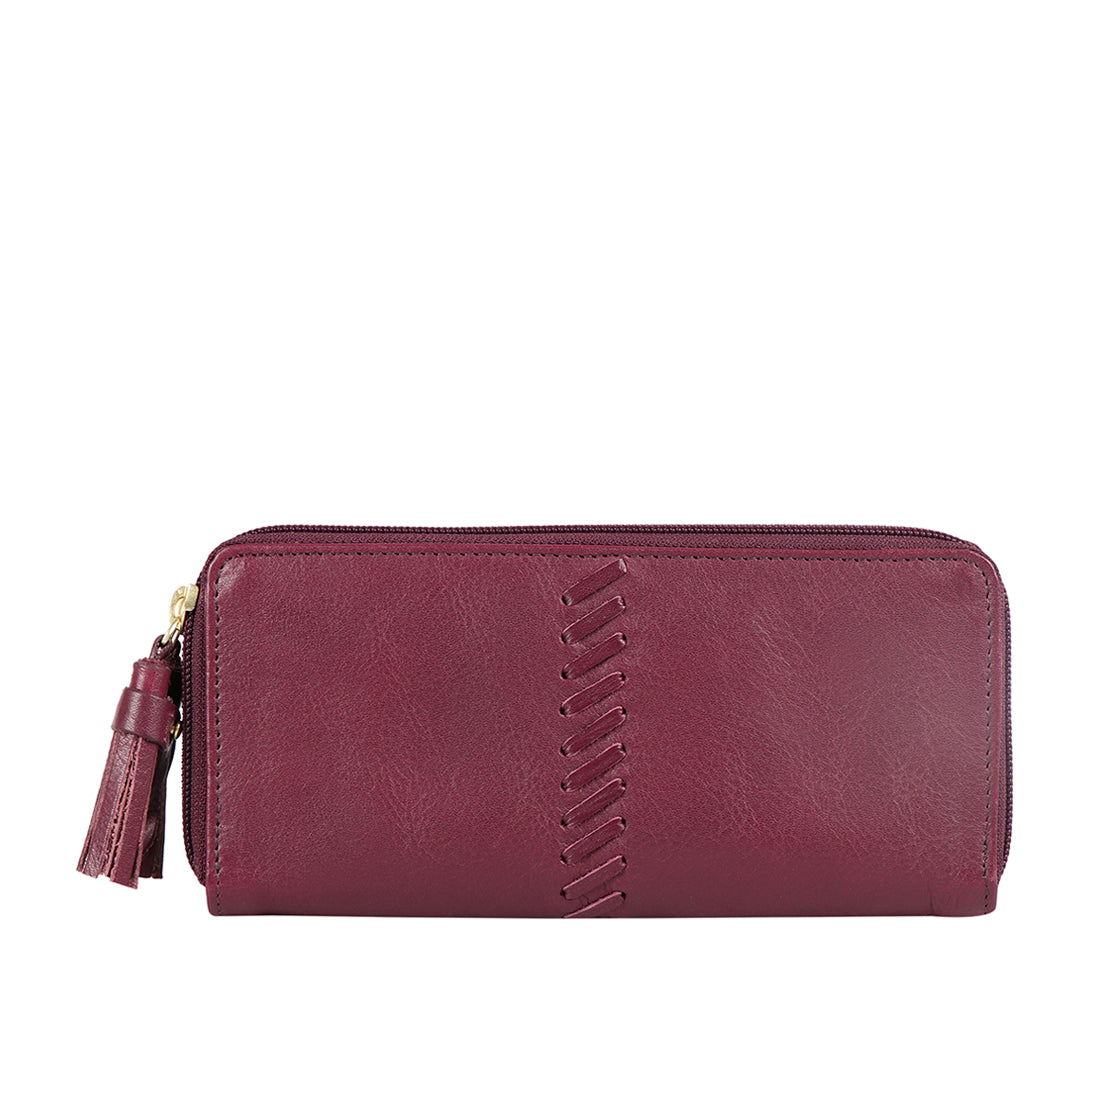 LUCKY BRAND Zip Around Tan Leather Clutch Wallet | eBay